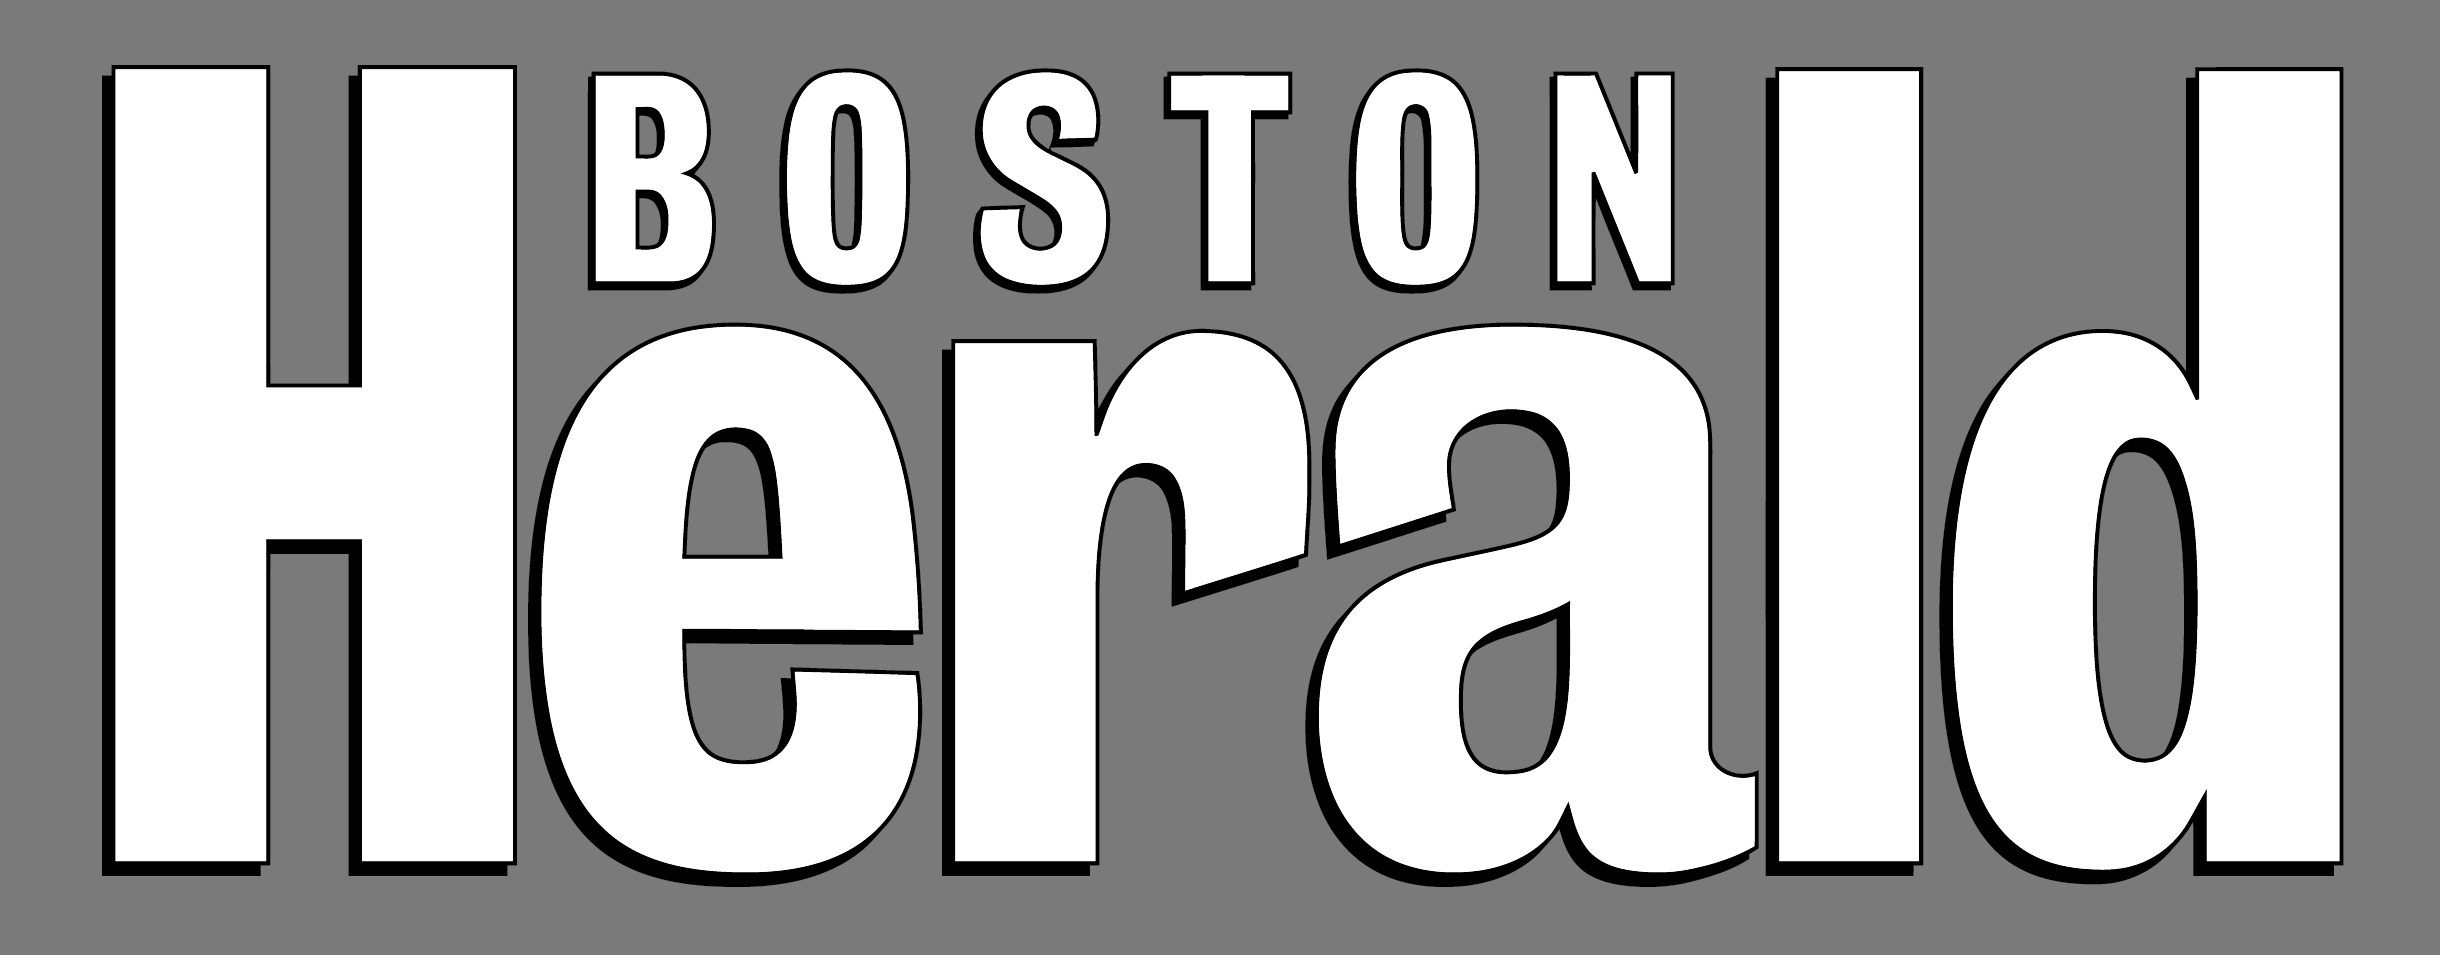 Boston-herald.png